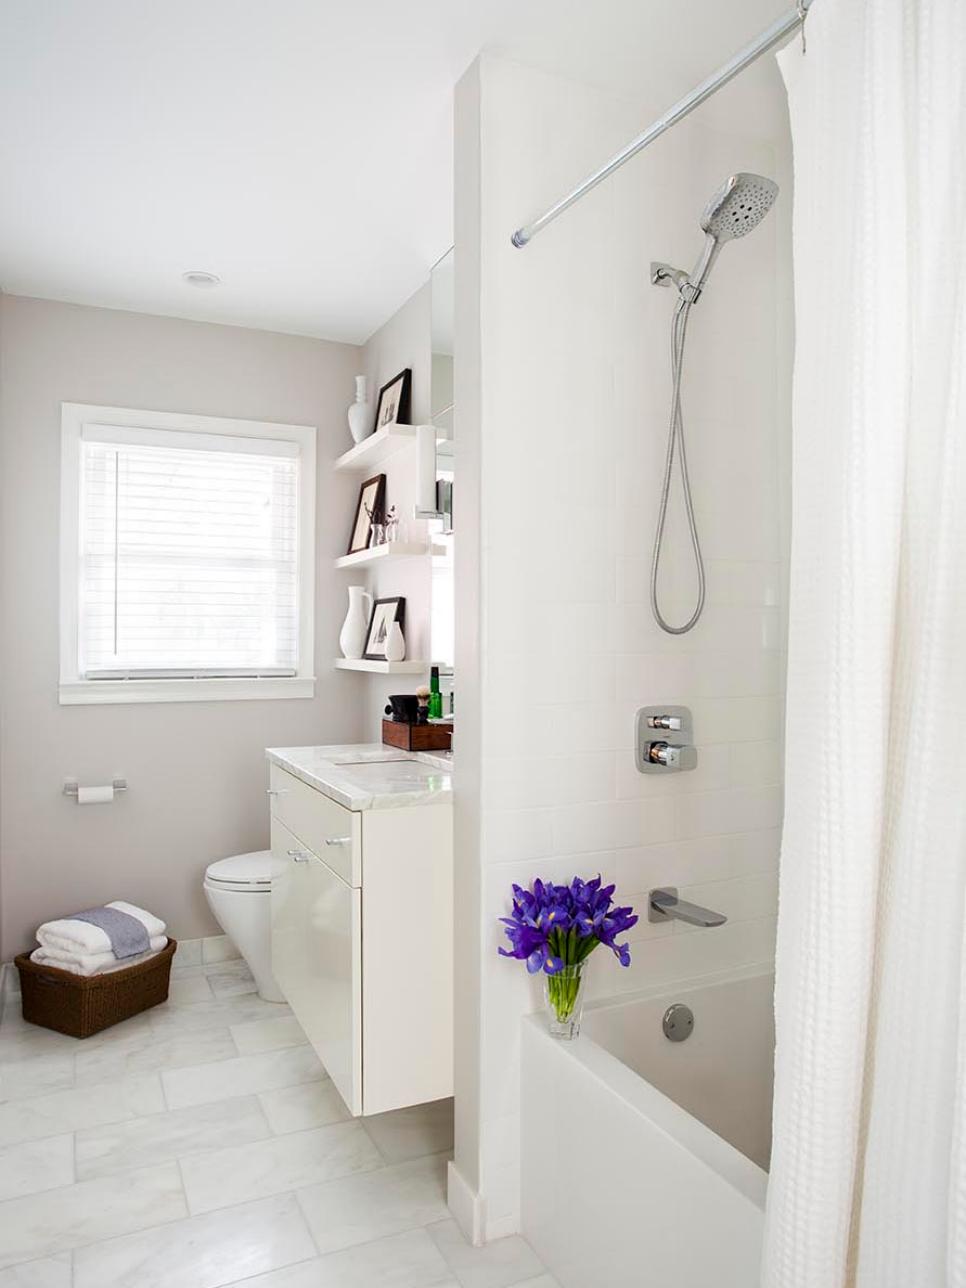 All-White Contemporary Bathroom With Purple Iris